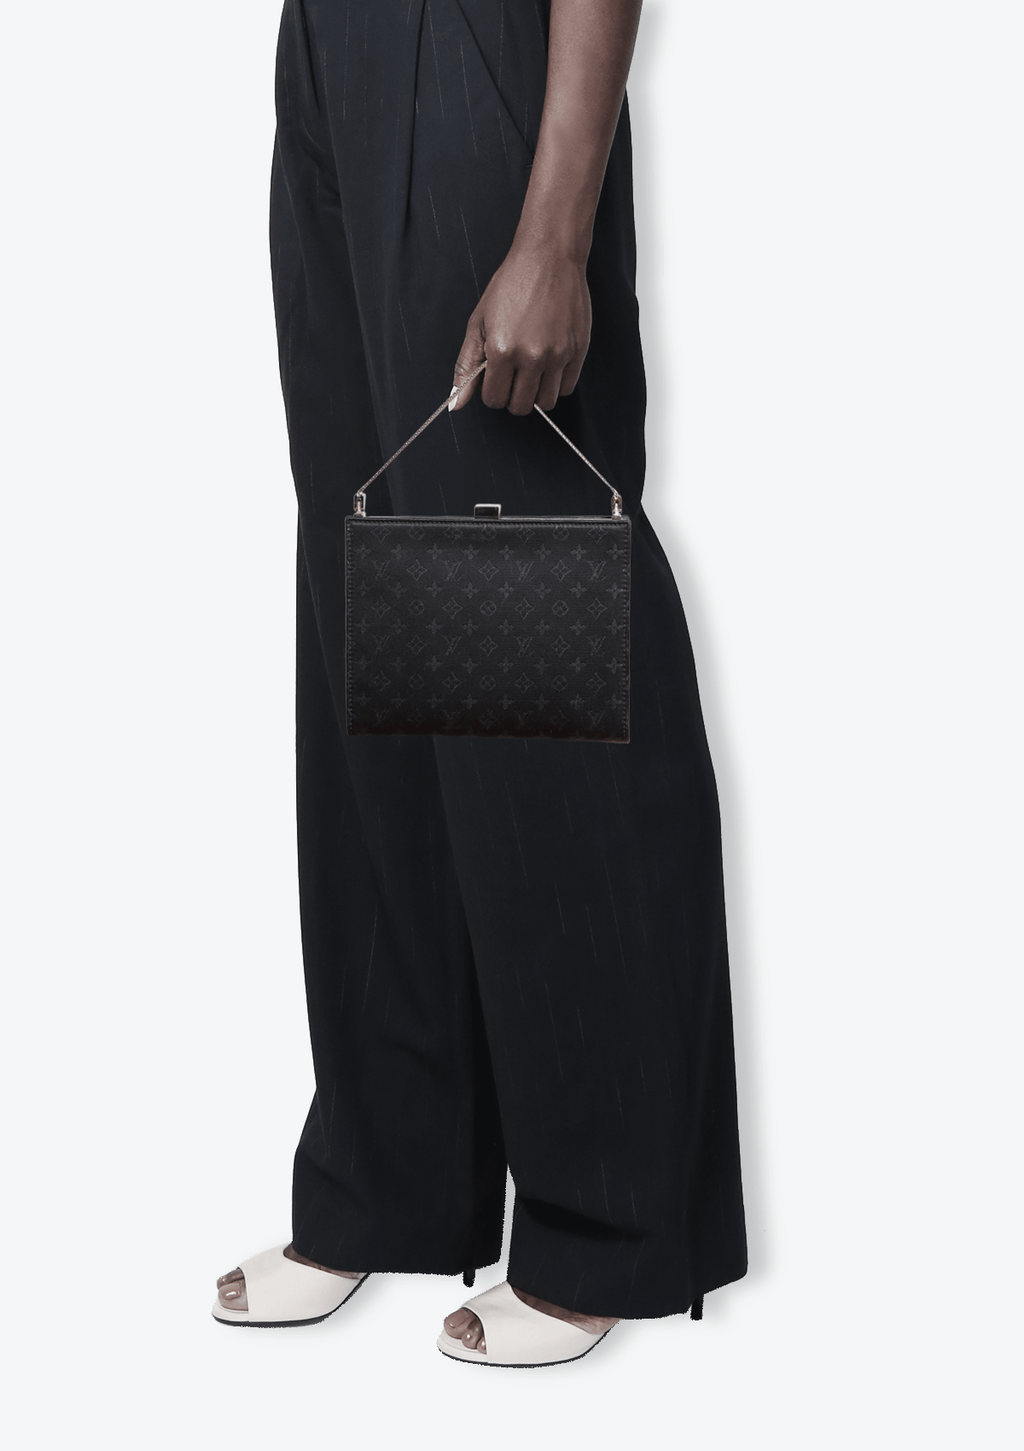 Louis Vuitton Louis Vuitton Ange PM Black Satin Monogram Evening Bag